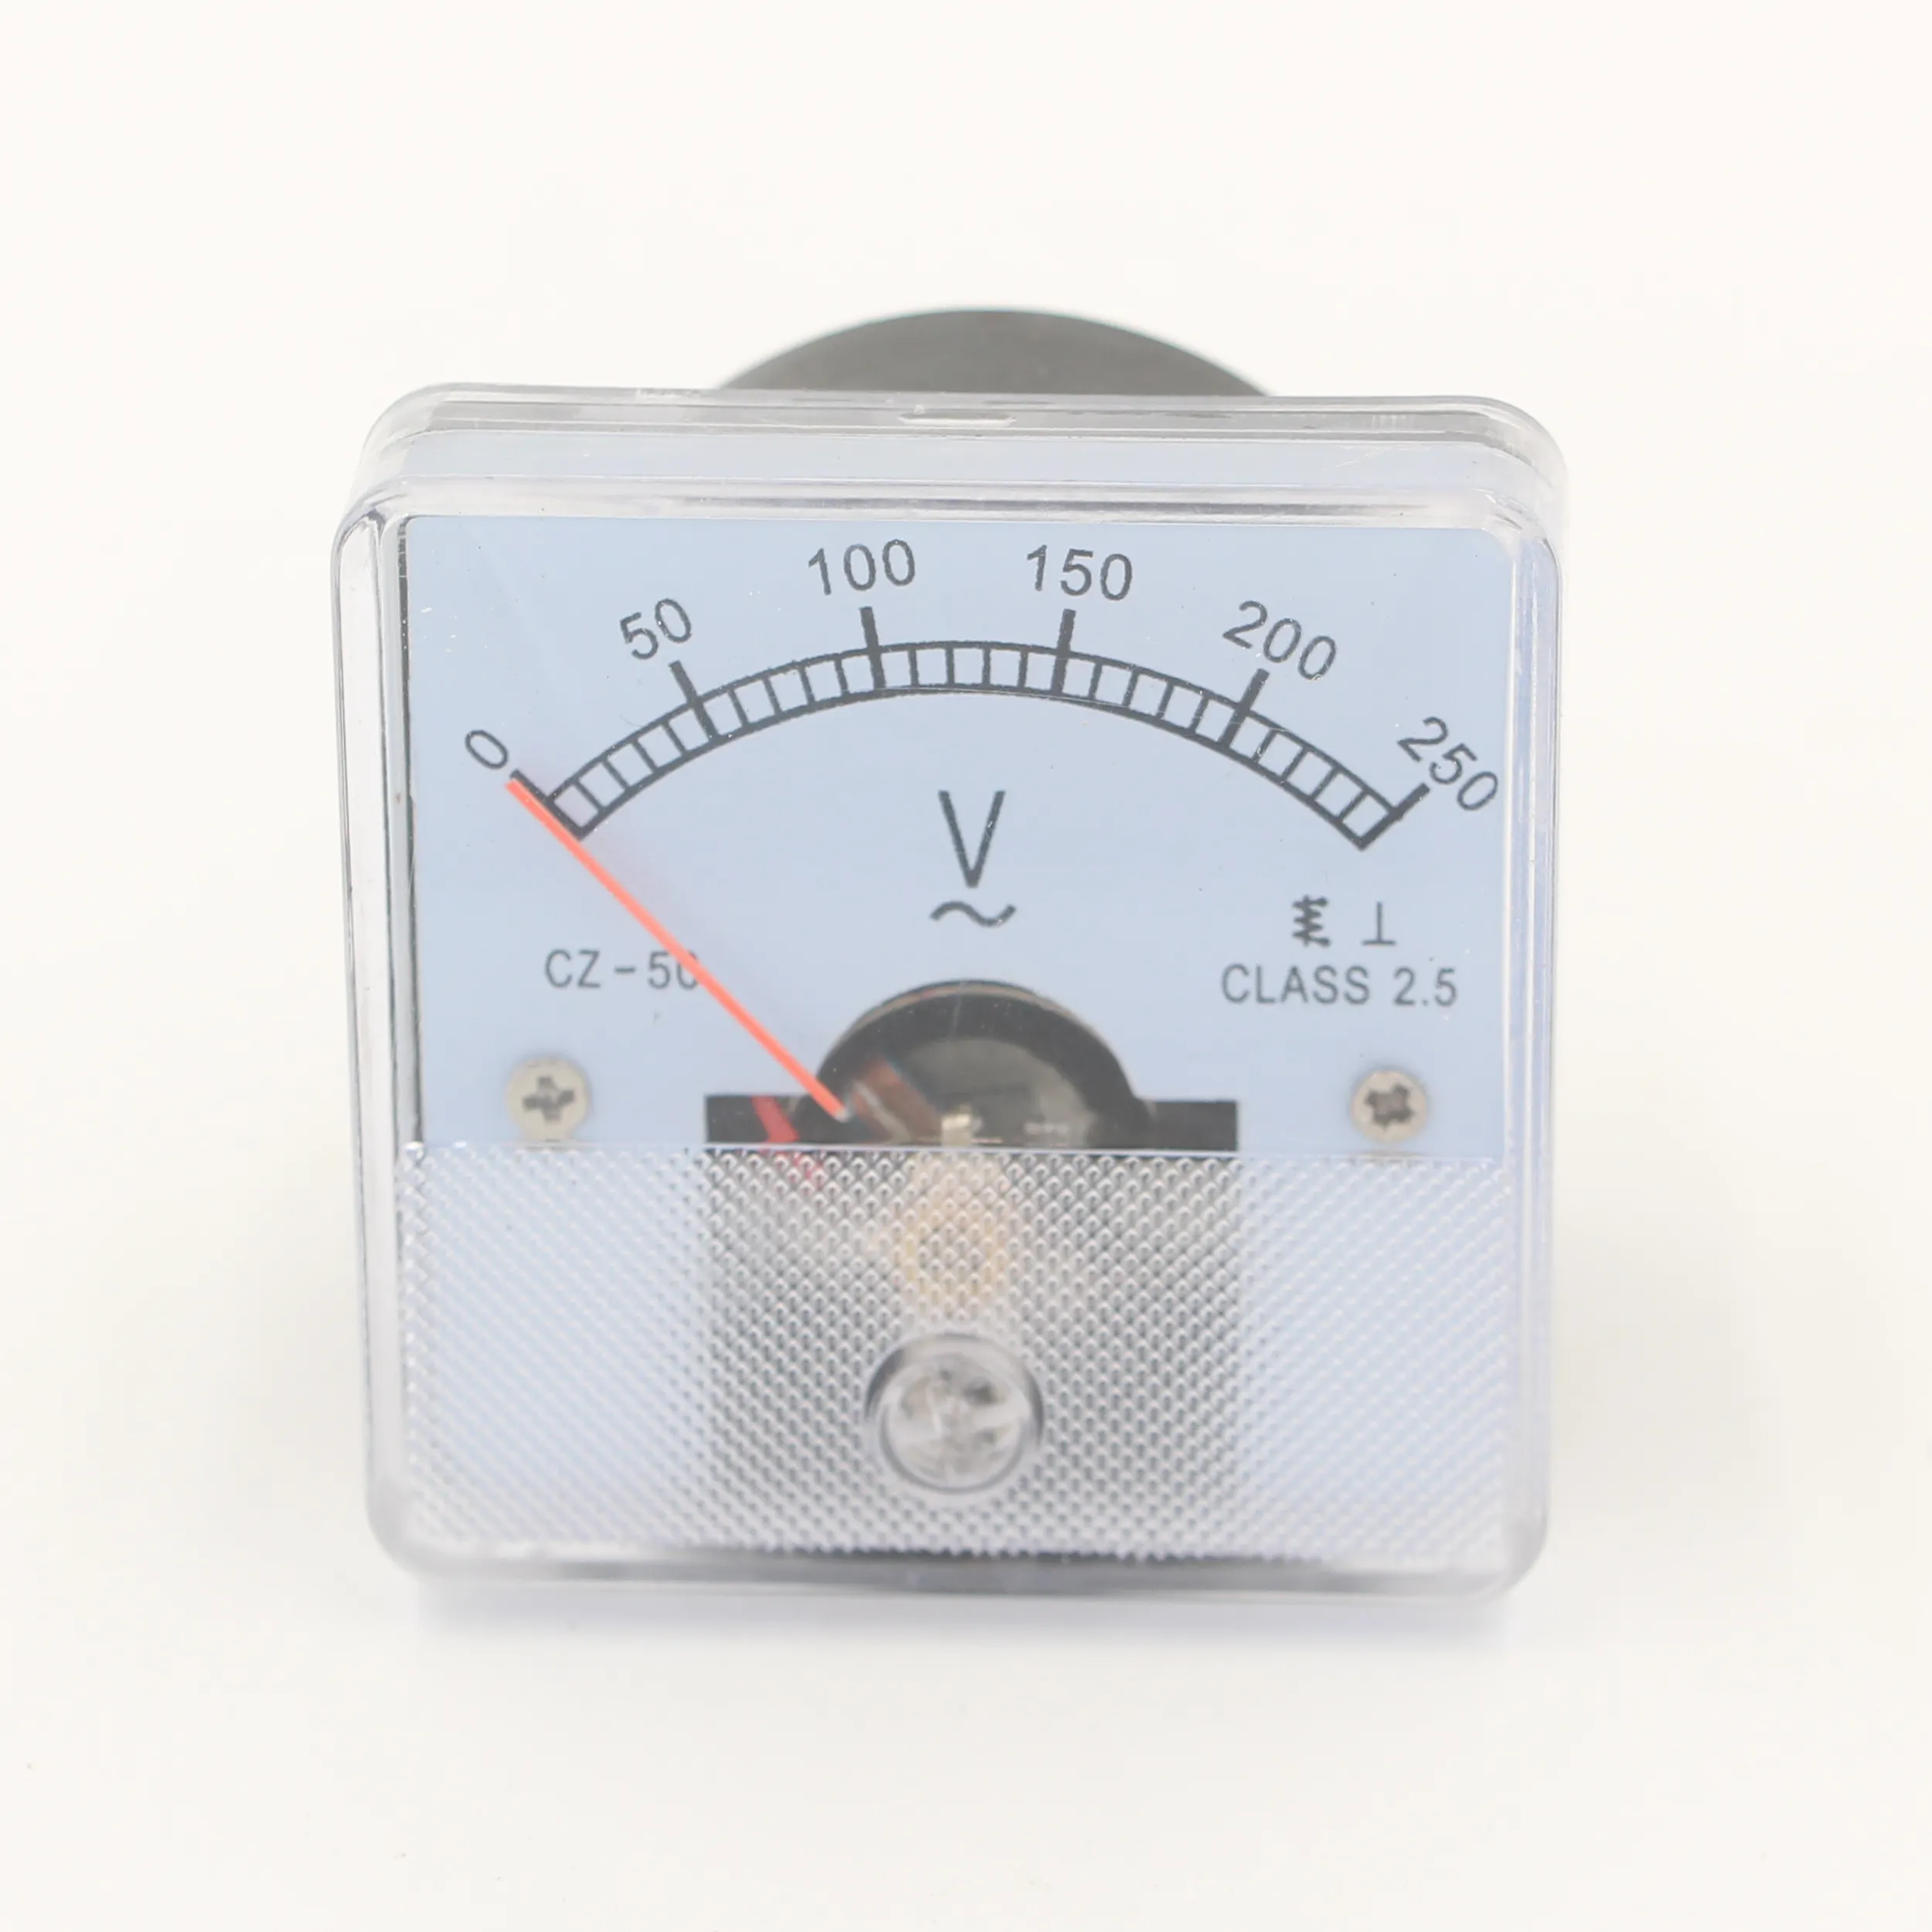 50*50mm analog voltage meter ac voltage display meter with measuring 0-250v analog ac voltmeter